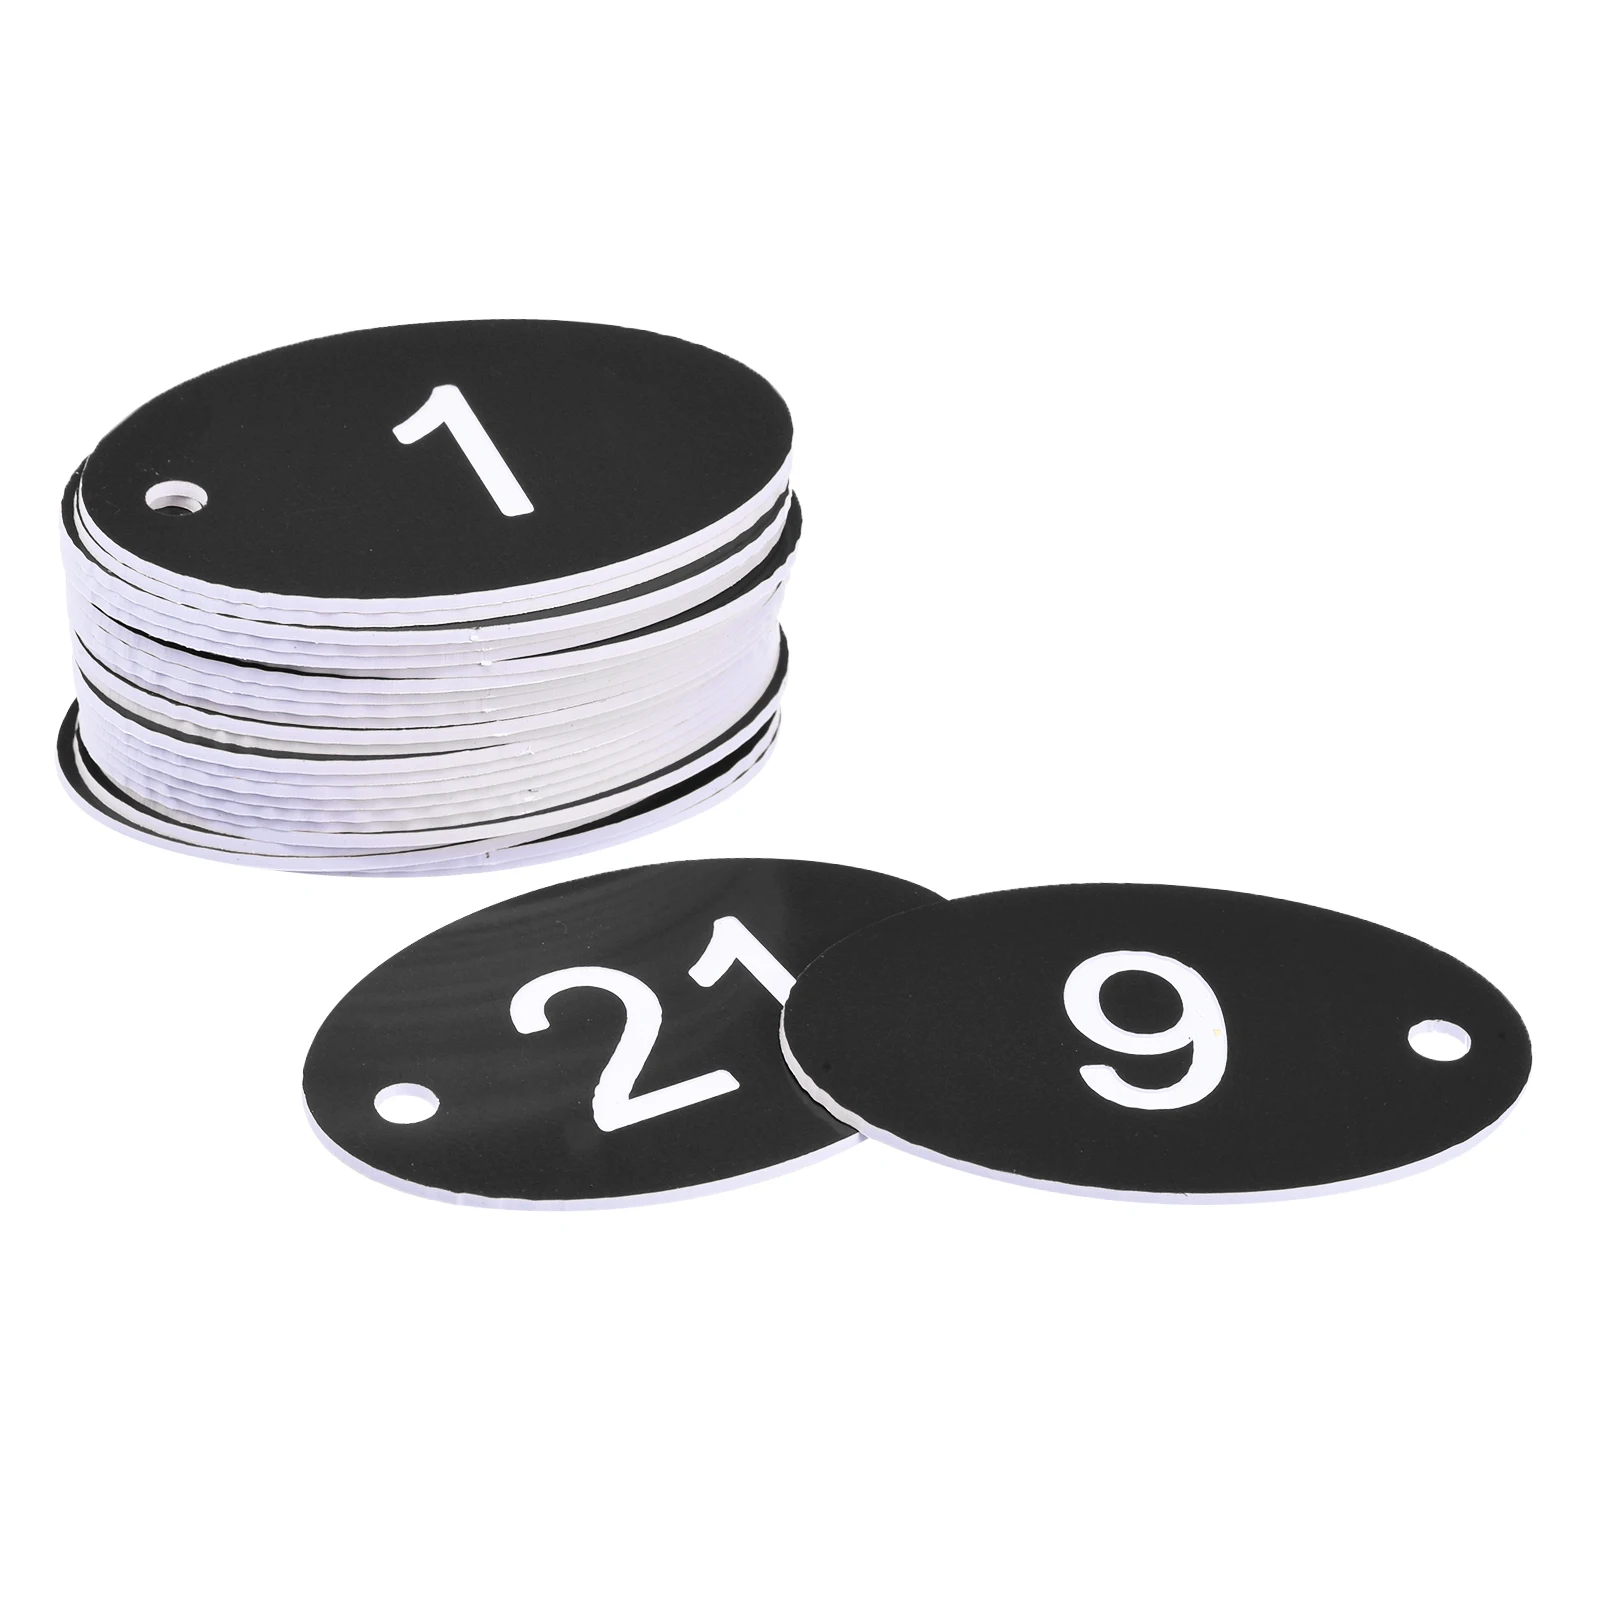 Uxcell Oval 1-25 Numarası Etiketi Anahtar Etiketi Akrilik Kazınmış Siyah KIMLIK Etiketi Dekorasyon, 25 paket